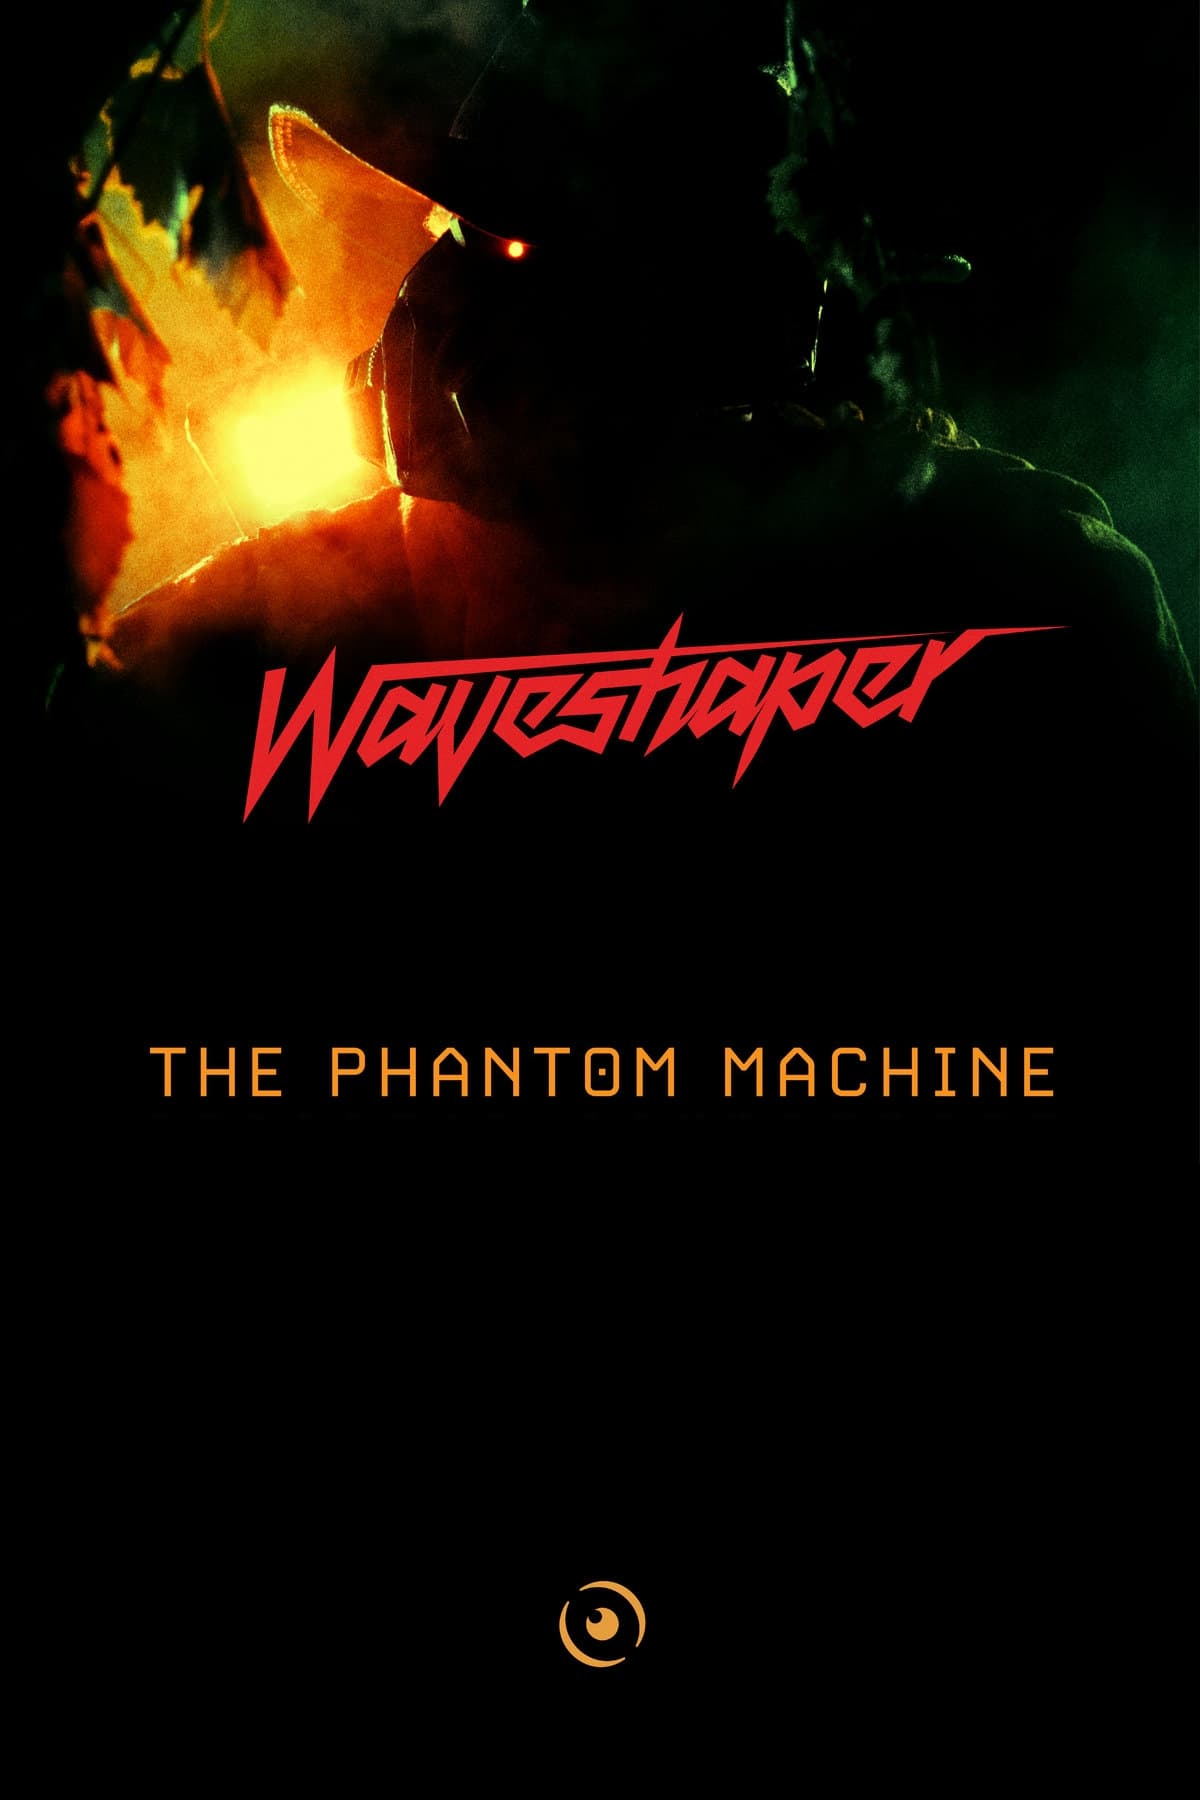 The Phantom Machine